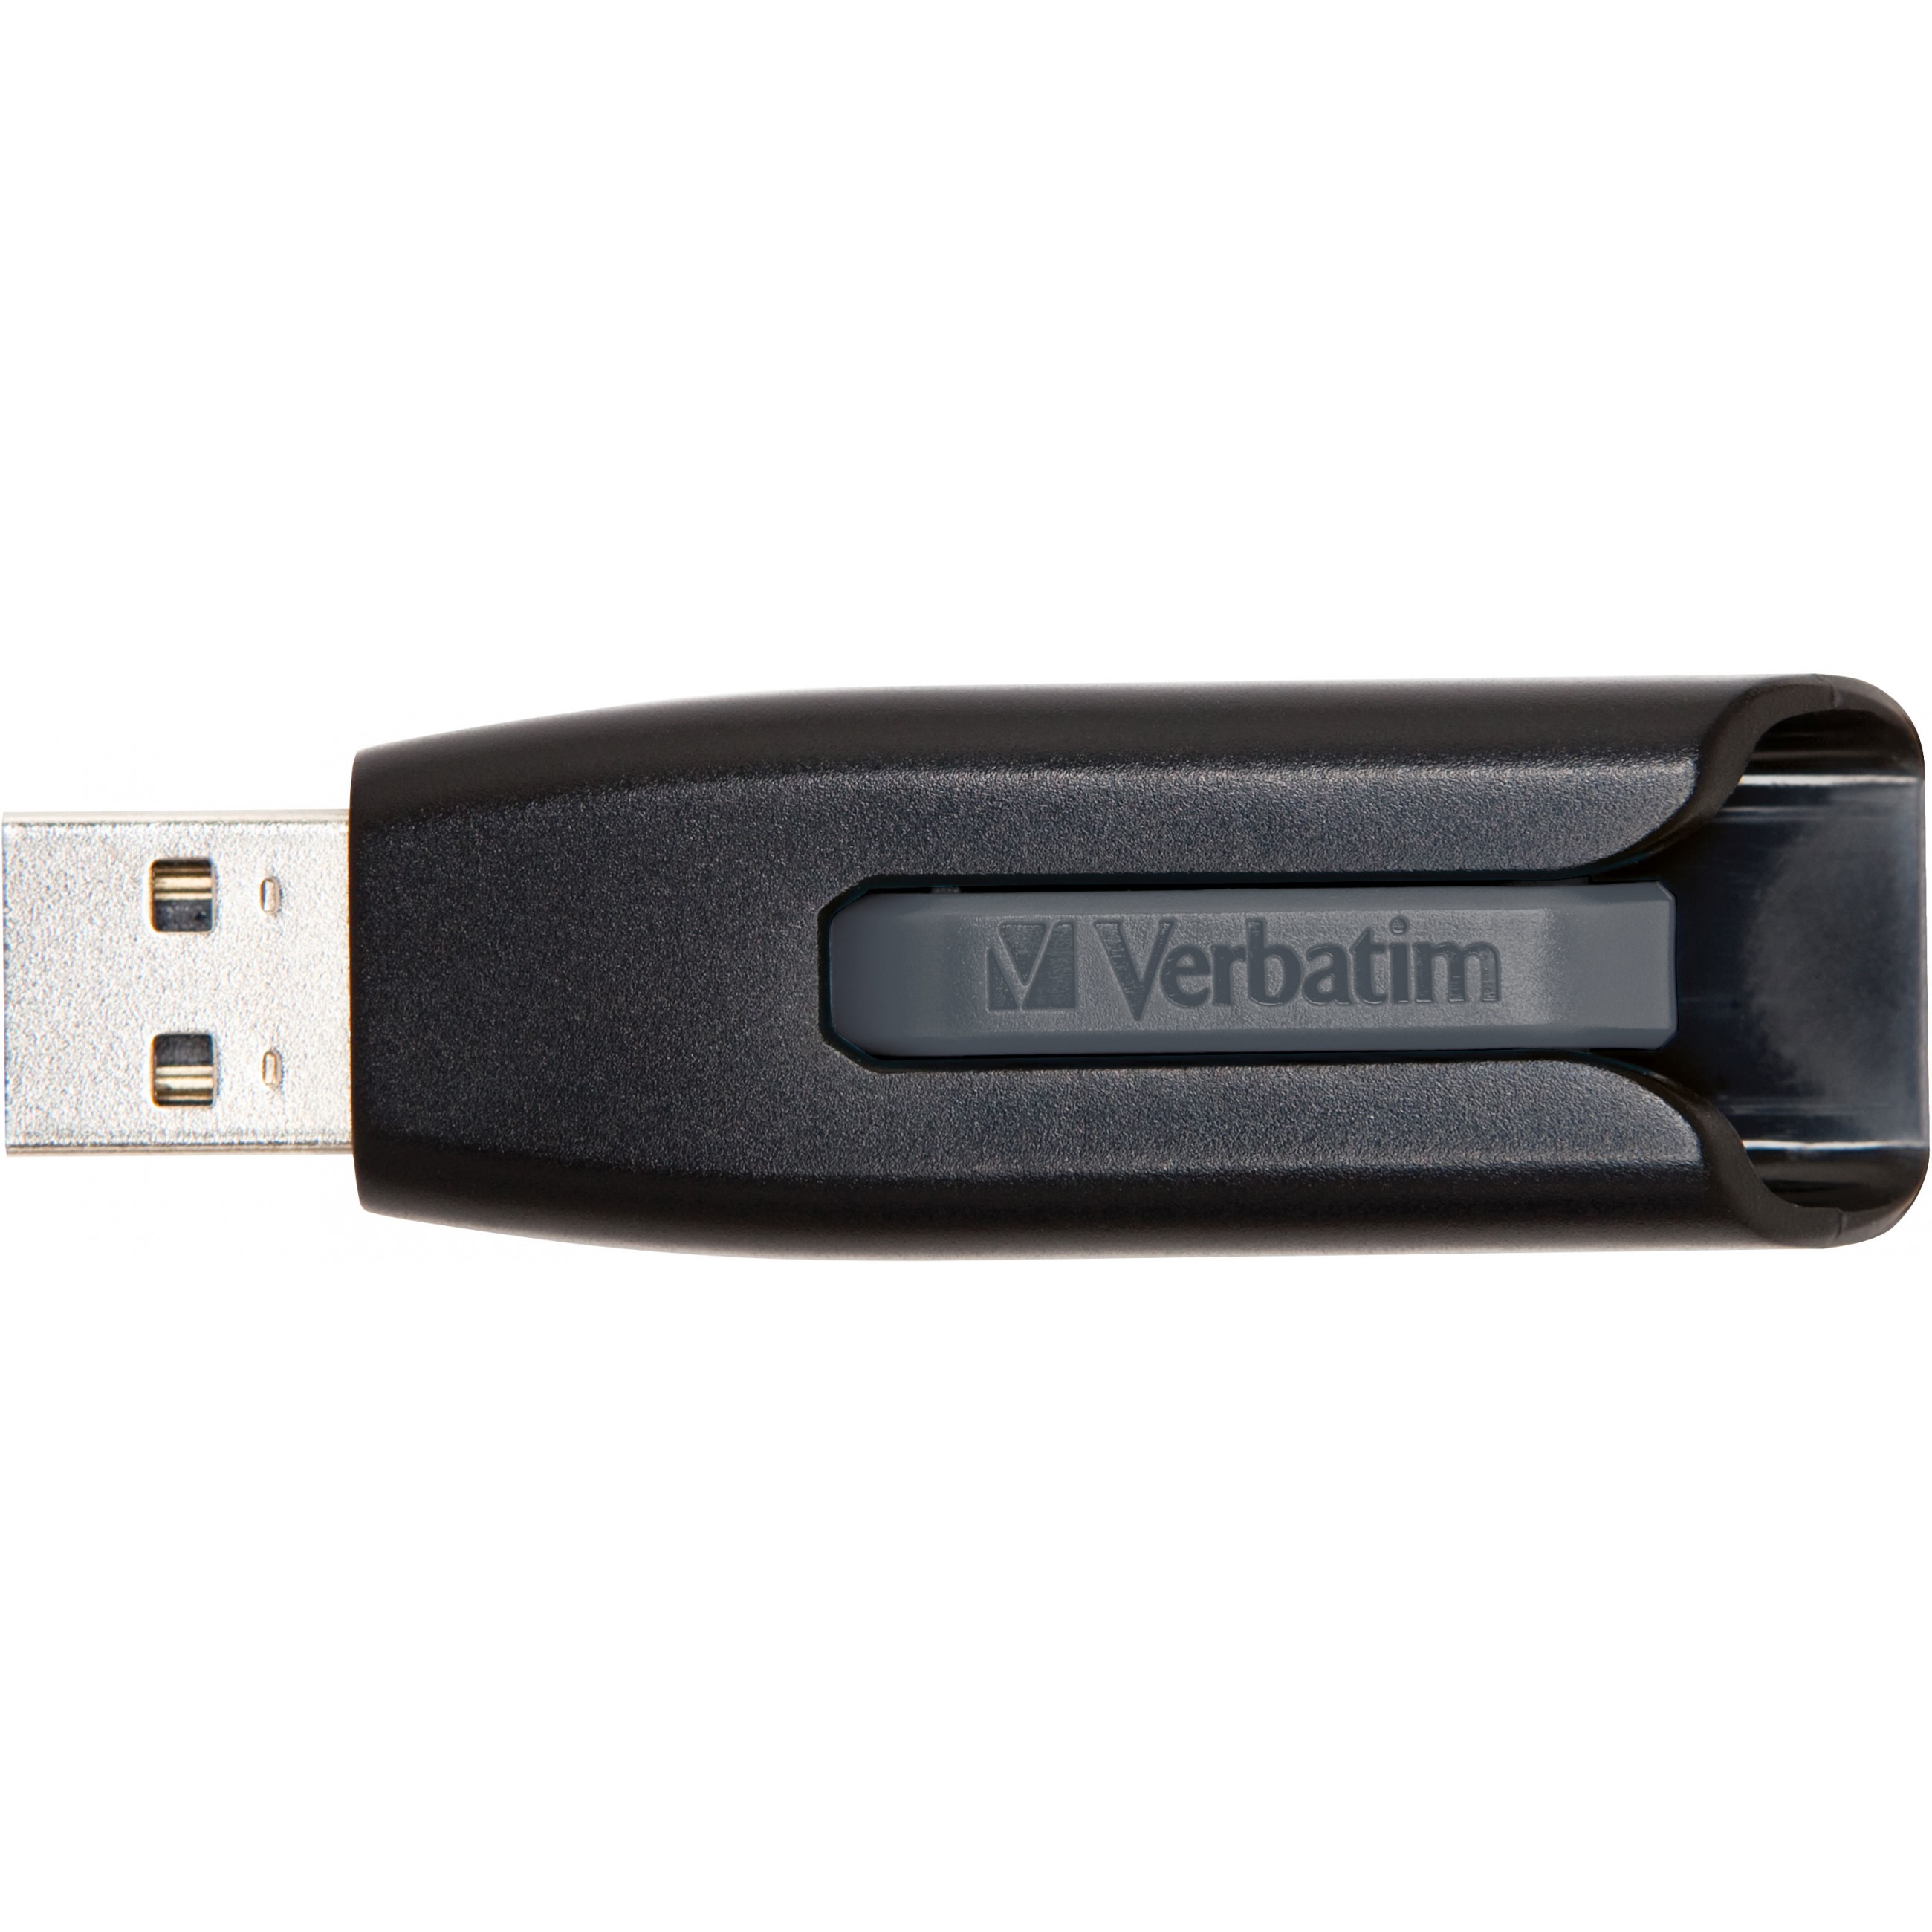 Verbatim 49174, USB-Stick, Verbatim V3 USB flash drive 49174 (BILD1)